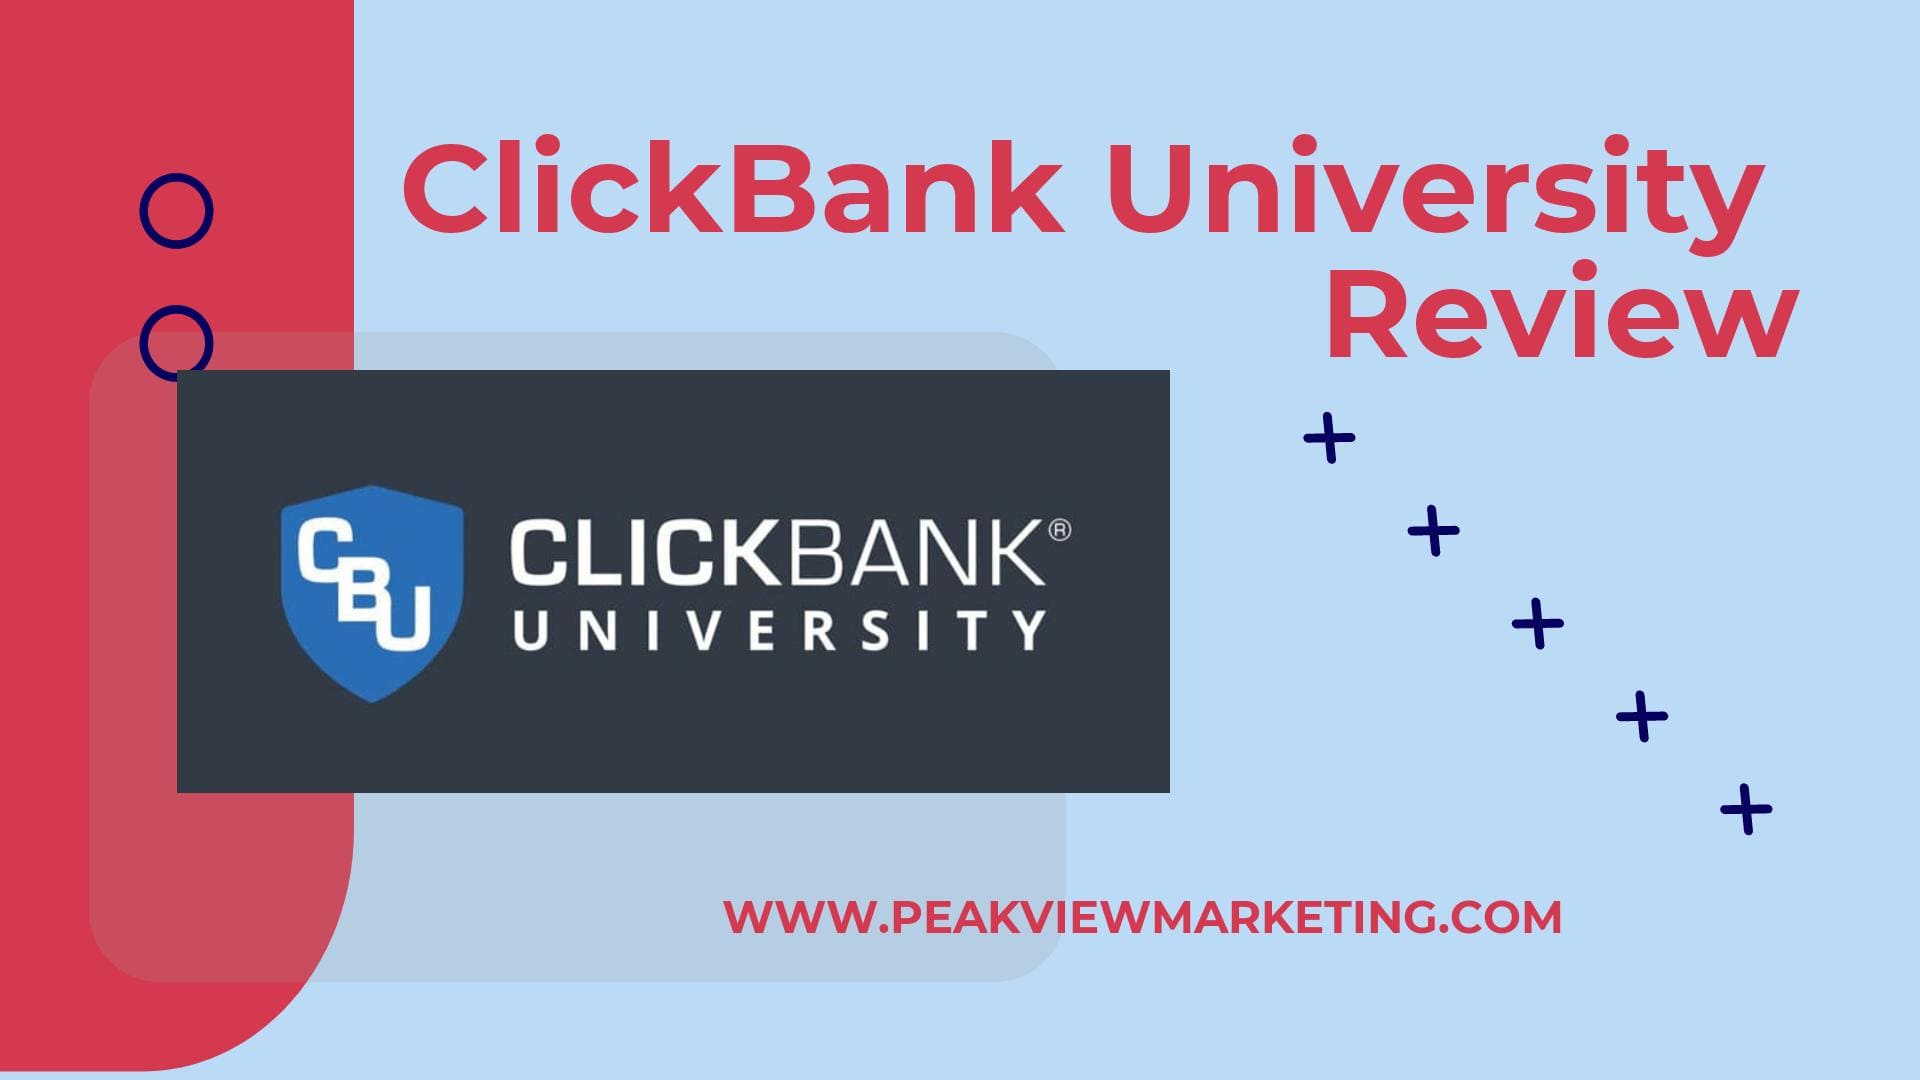 ClickBank University Review Image